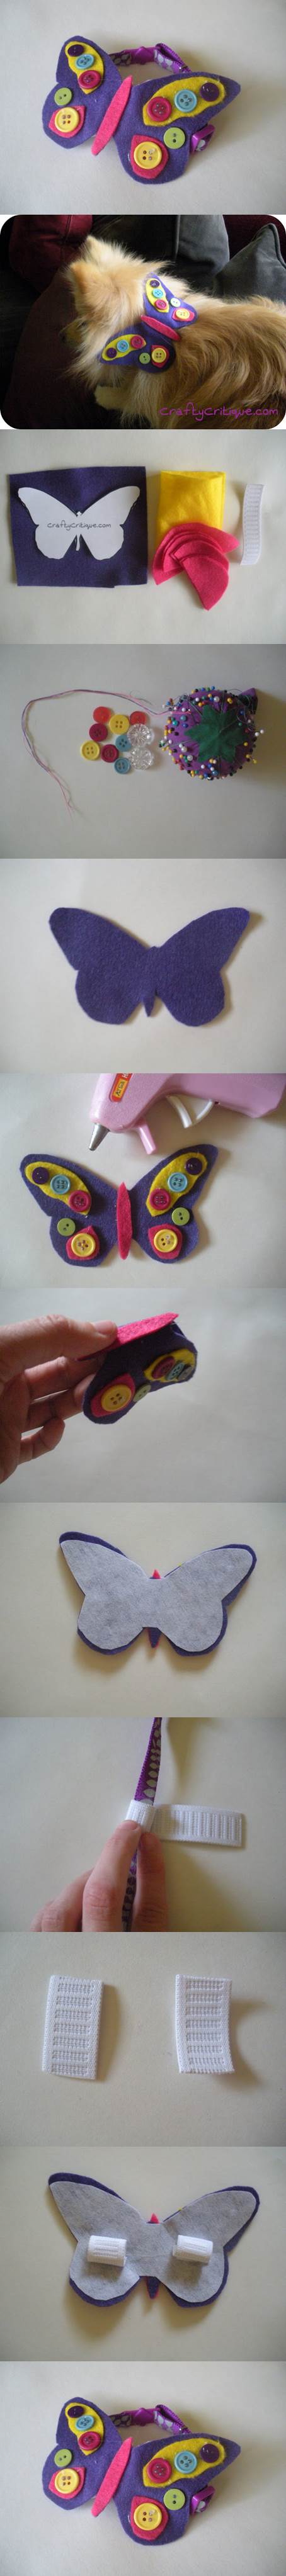 DIY Felt Butterfly Dog Collar Embellishment 2